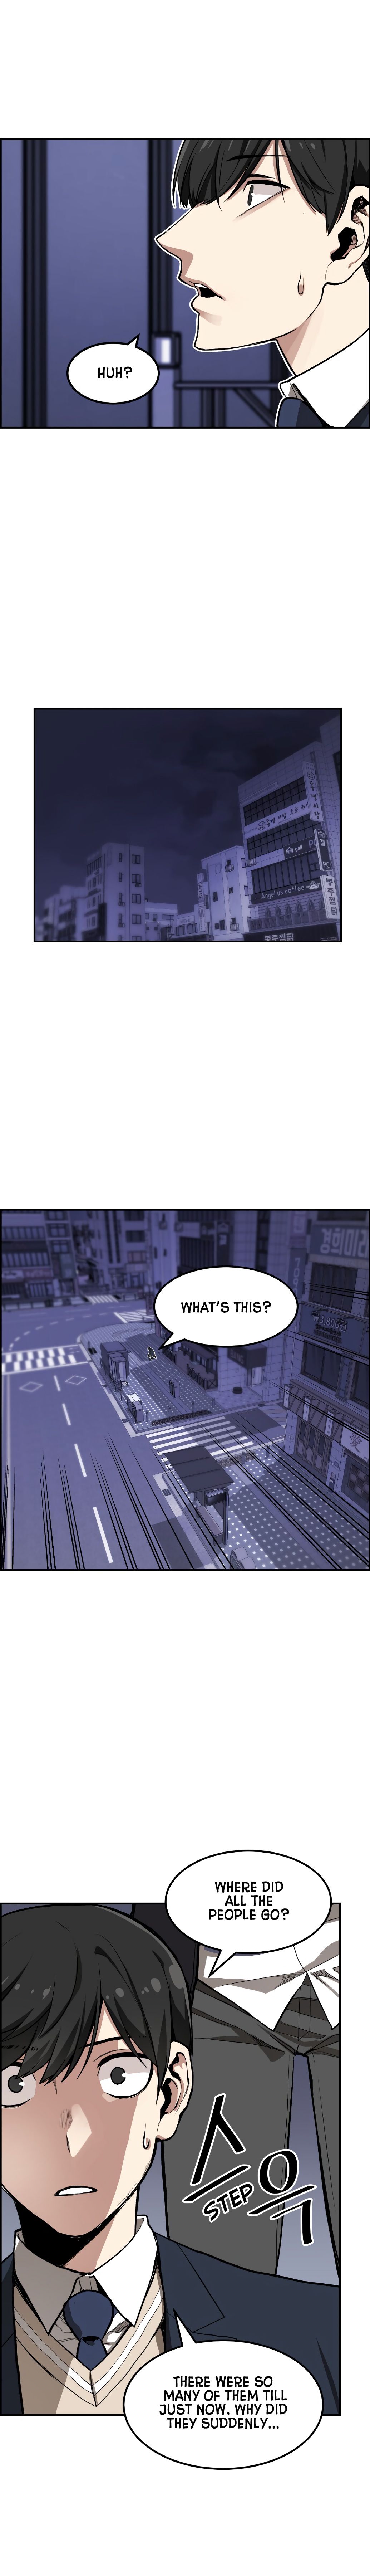 Gangnam Dokkaebi - Page 2